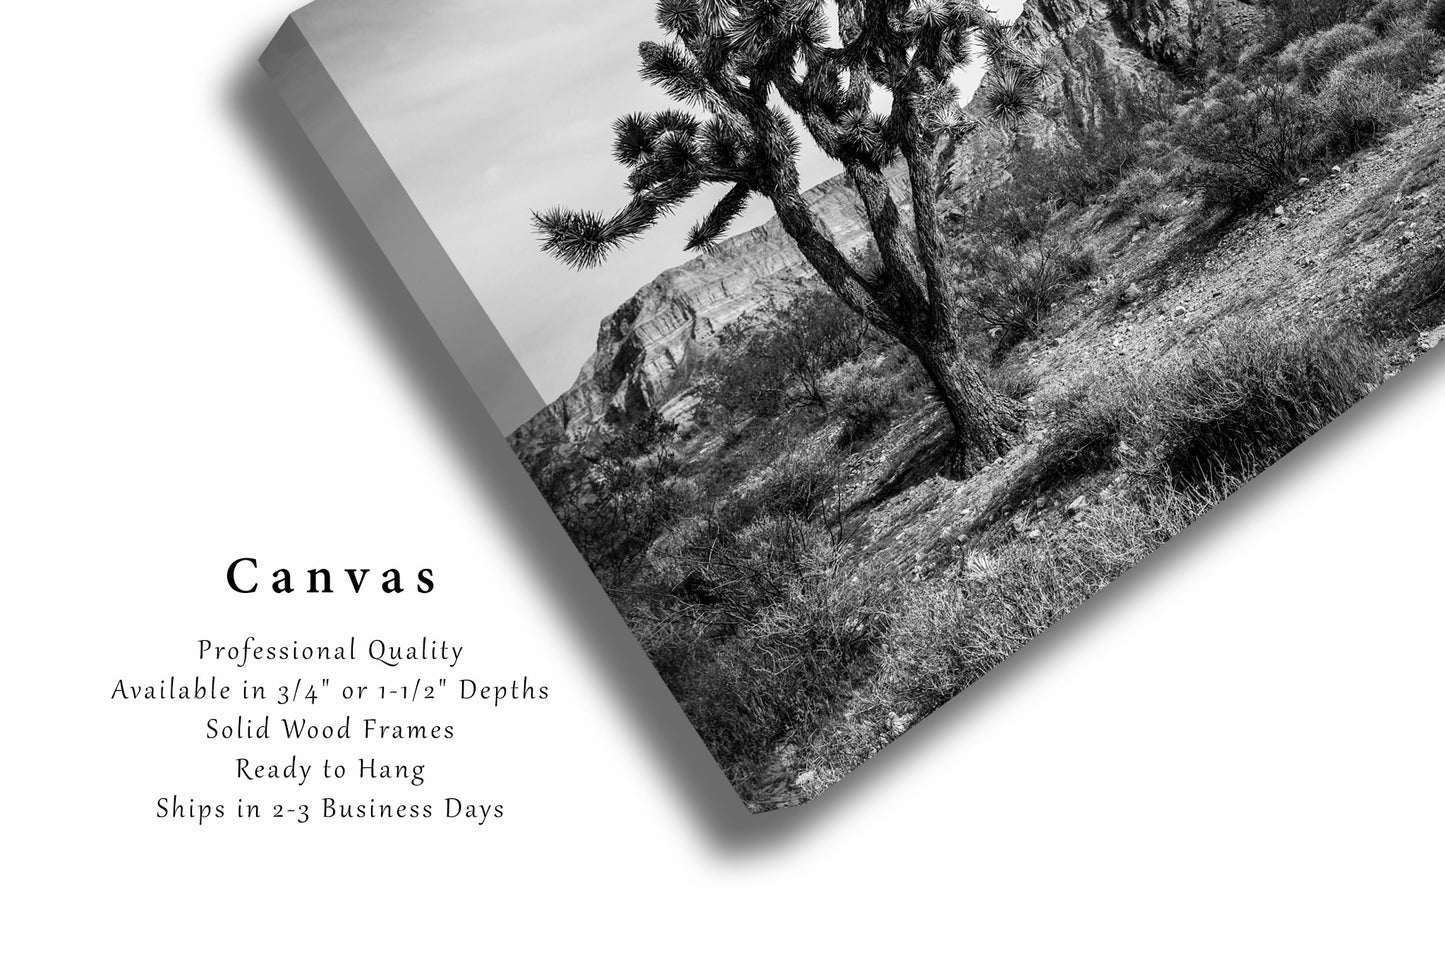 Desert Canvas Wall Art - Black and White Gallery Wrap of Joshua Tree and Mountain in Arizona - Southwest Photography Photo Artwork Decor